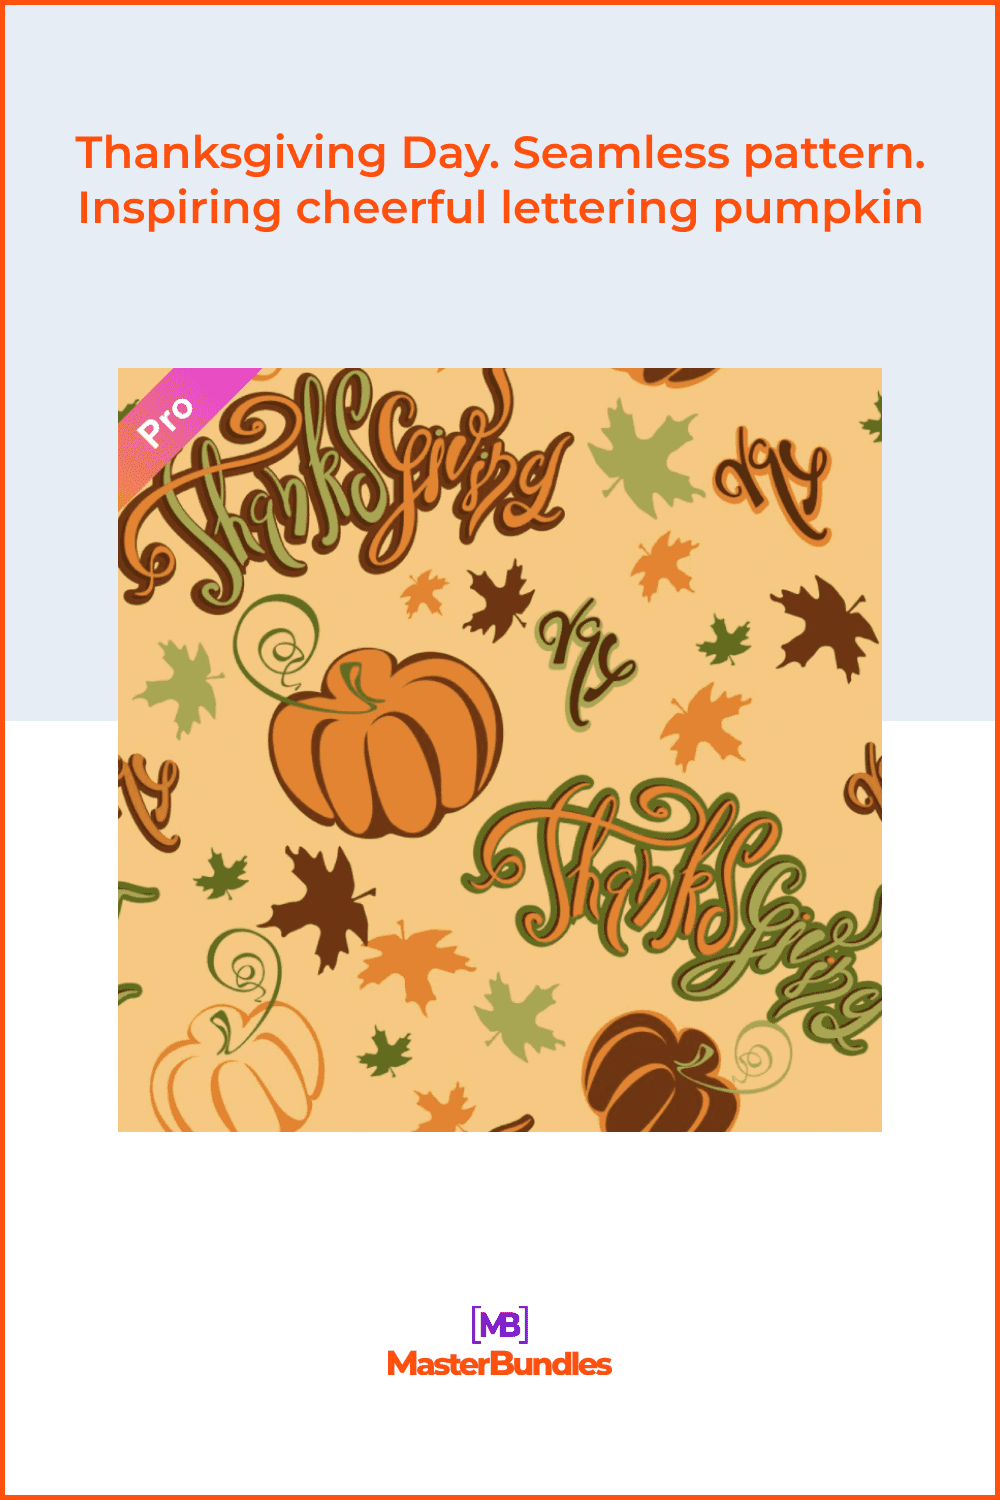 Inspiring cheerful lettering pumpkin.